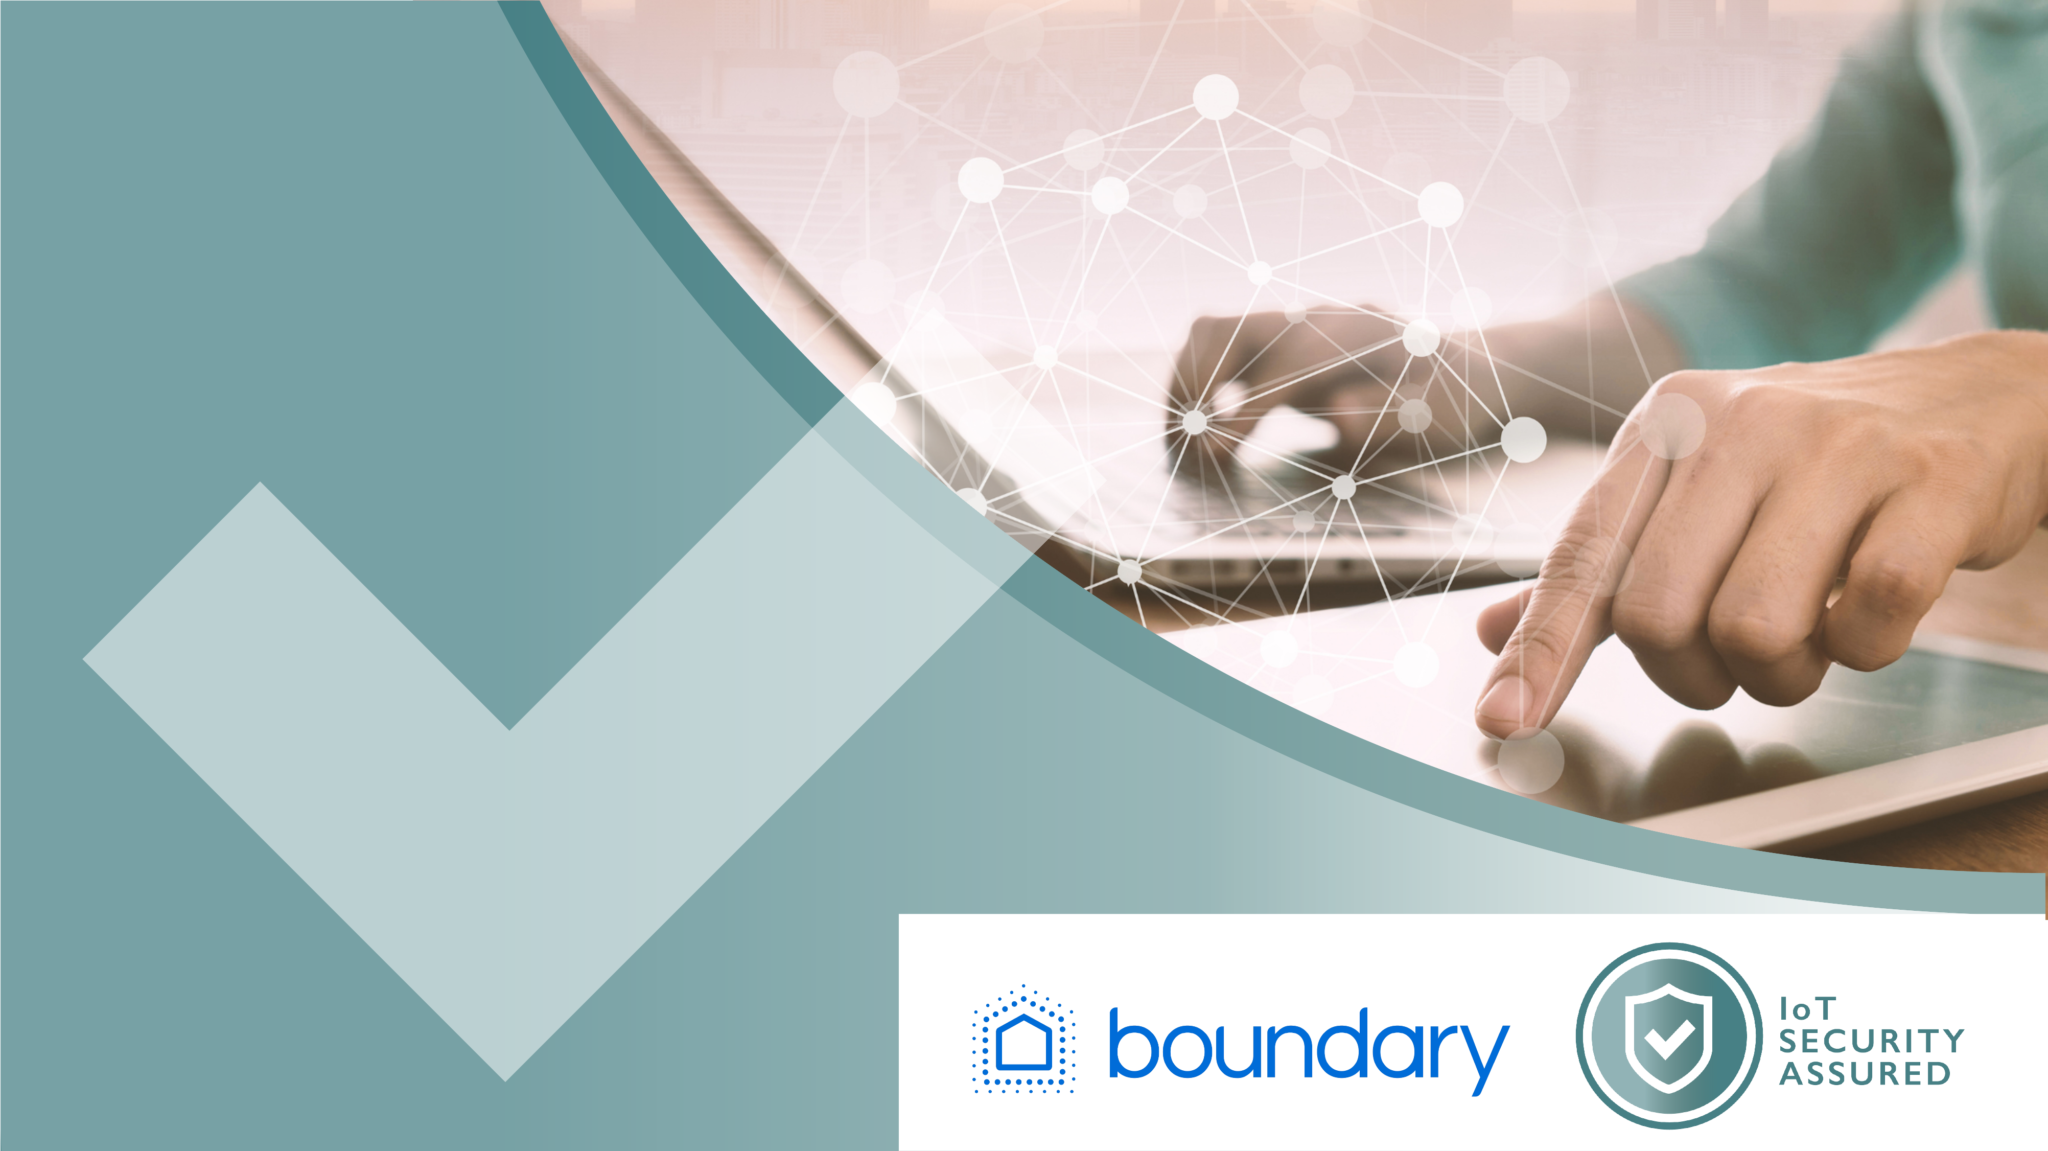 Boundary Technologies Ltd – IoT Security Assured Case Study